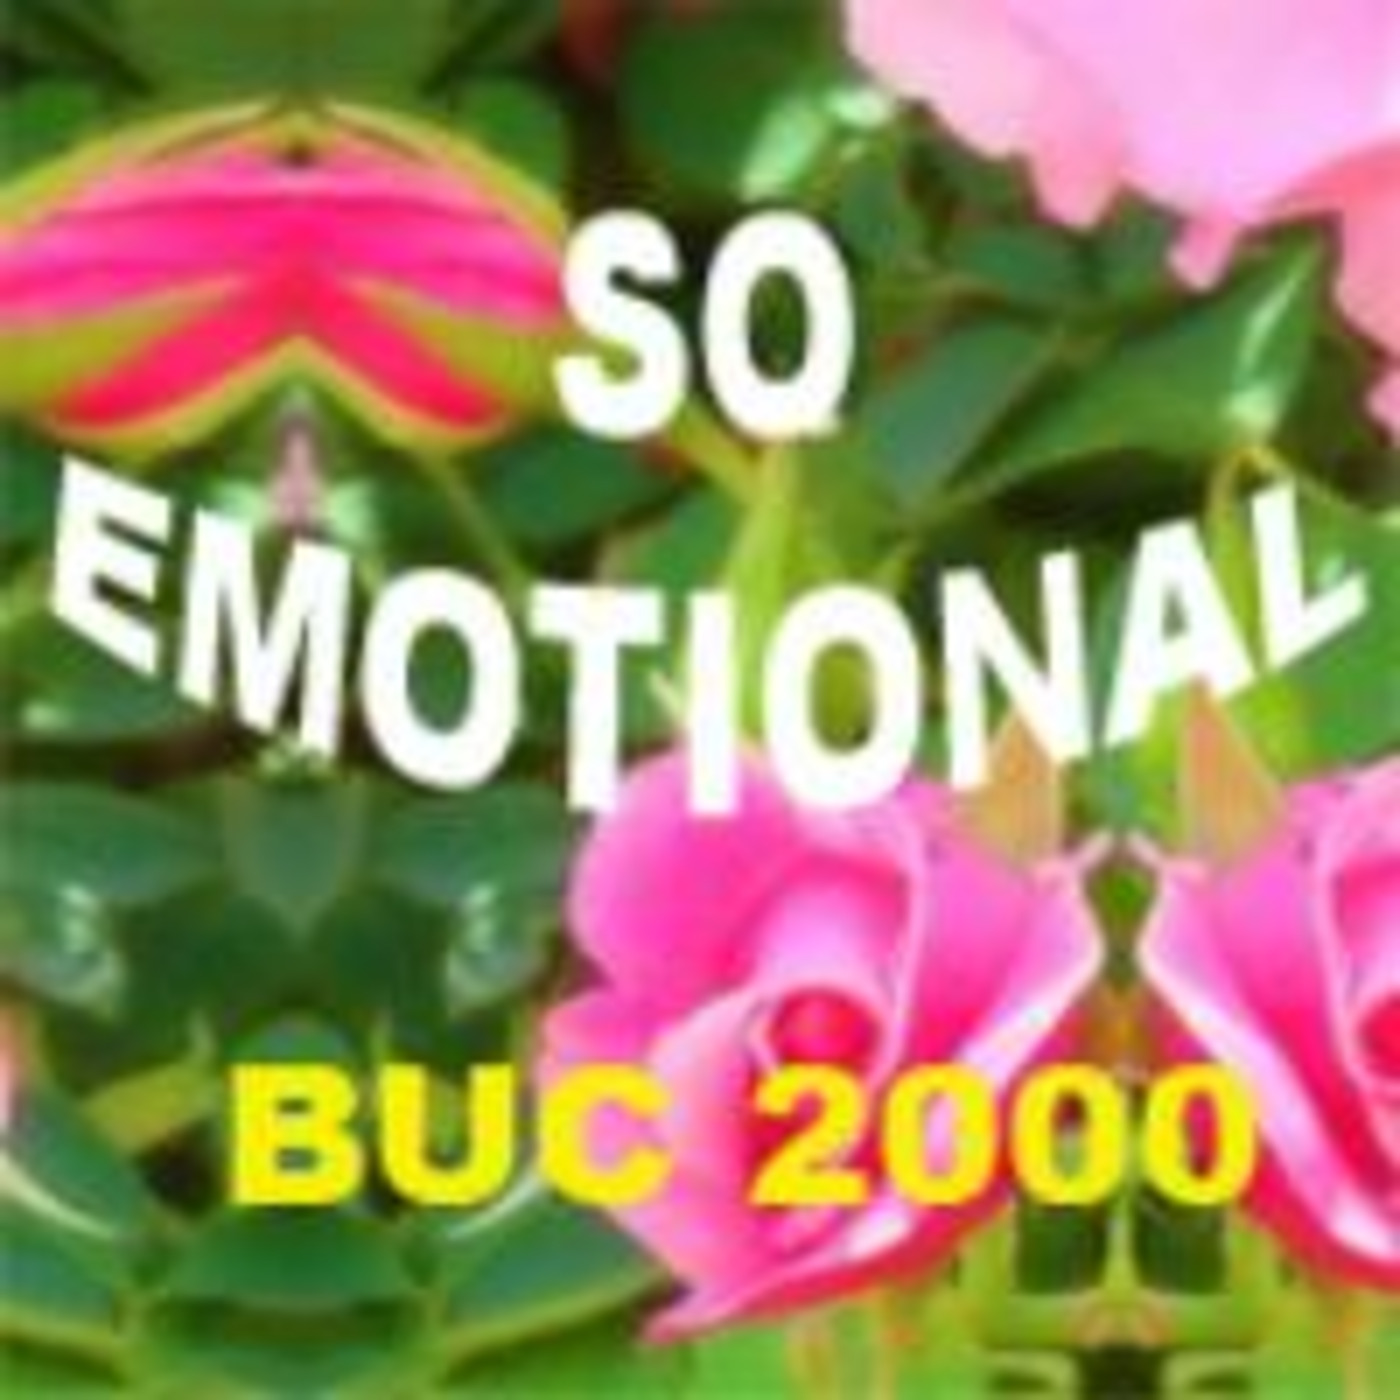 DJ Buc_So Emotional (2000) - Part 4